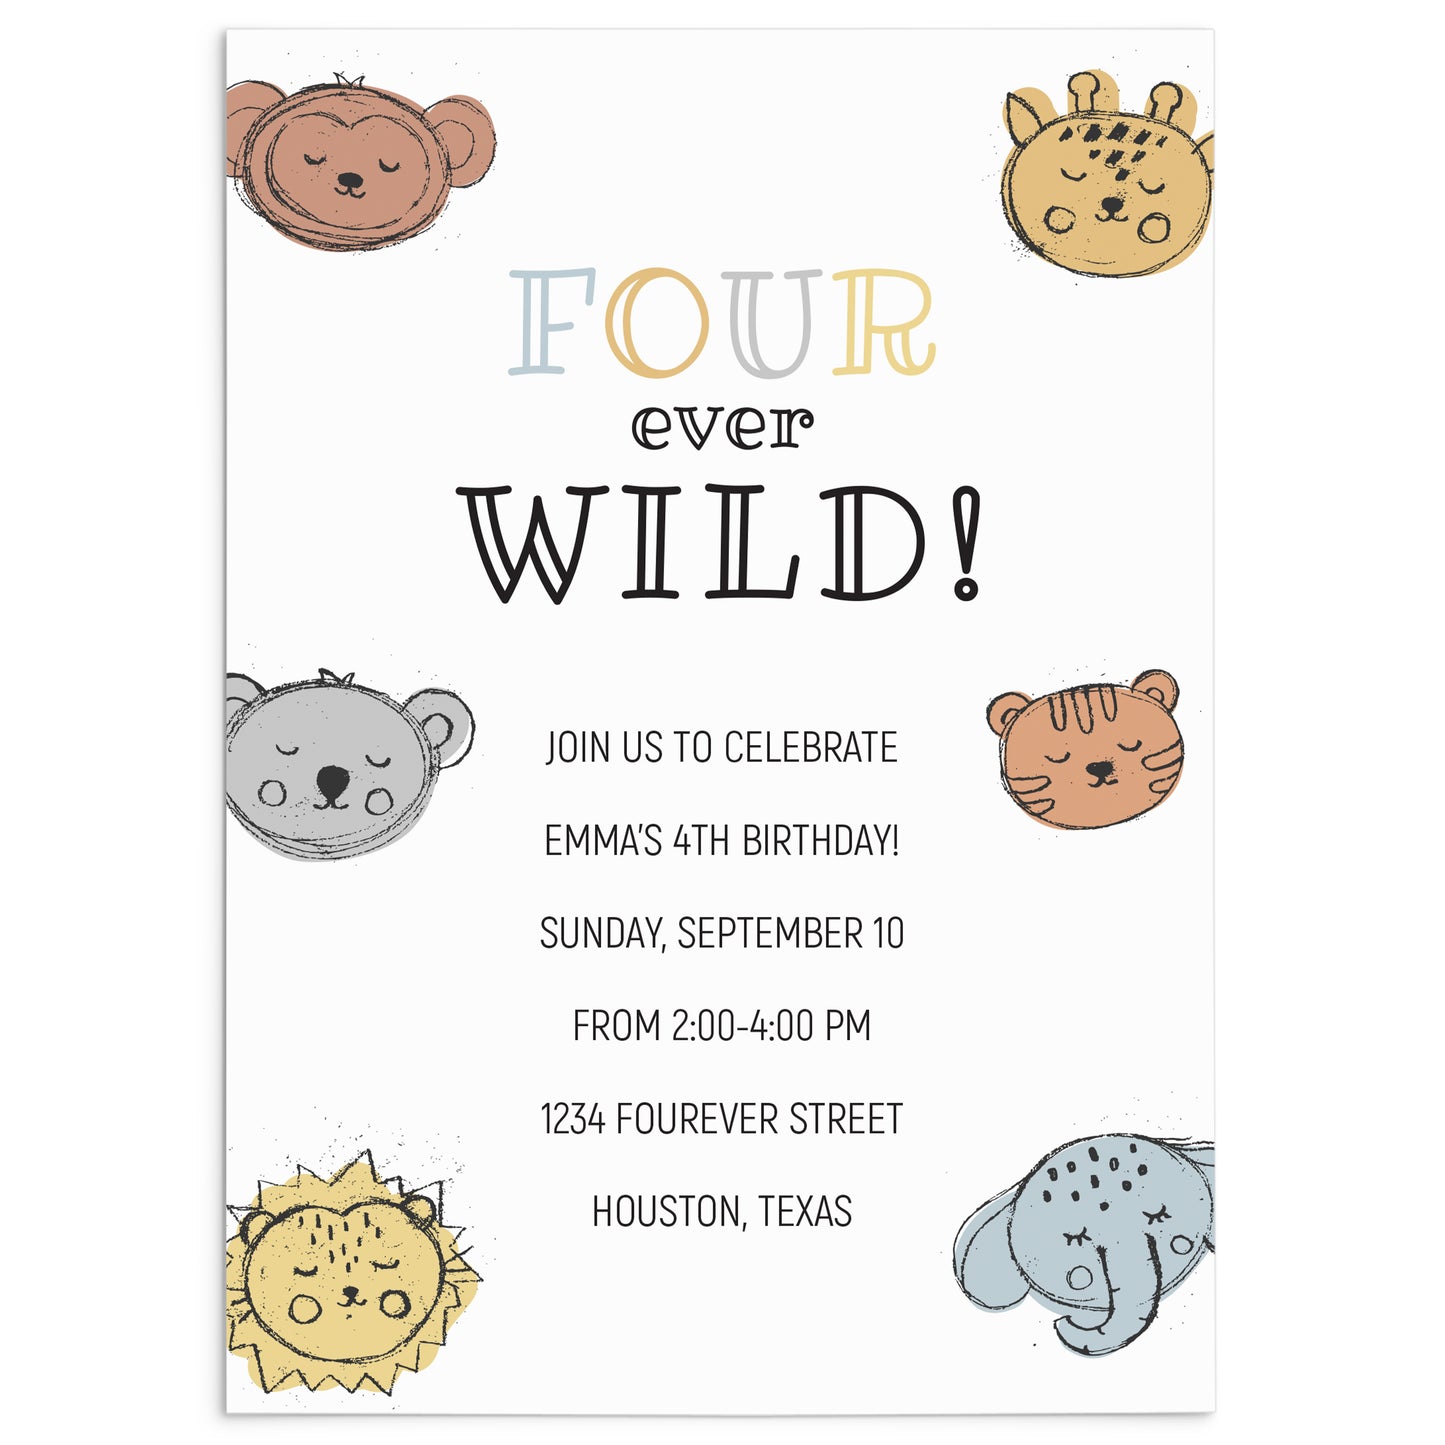 Fourever Wild 4th Birthday Invitation